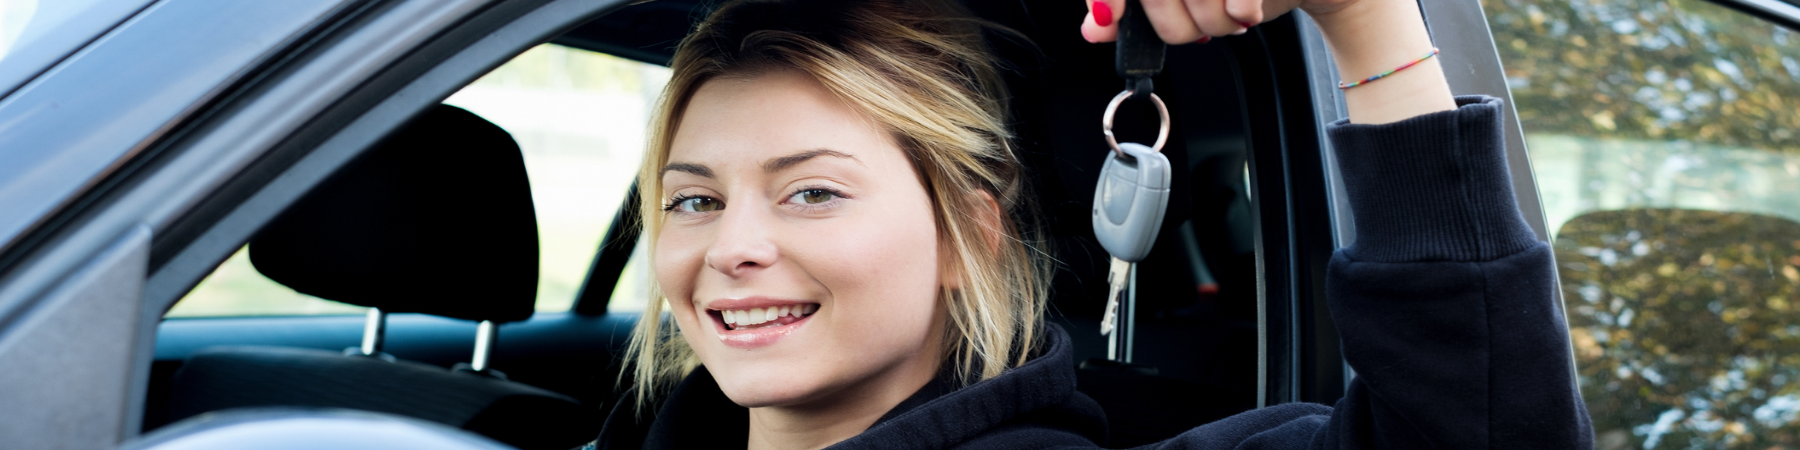 Girl holding car keys while in car